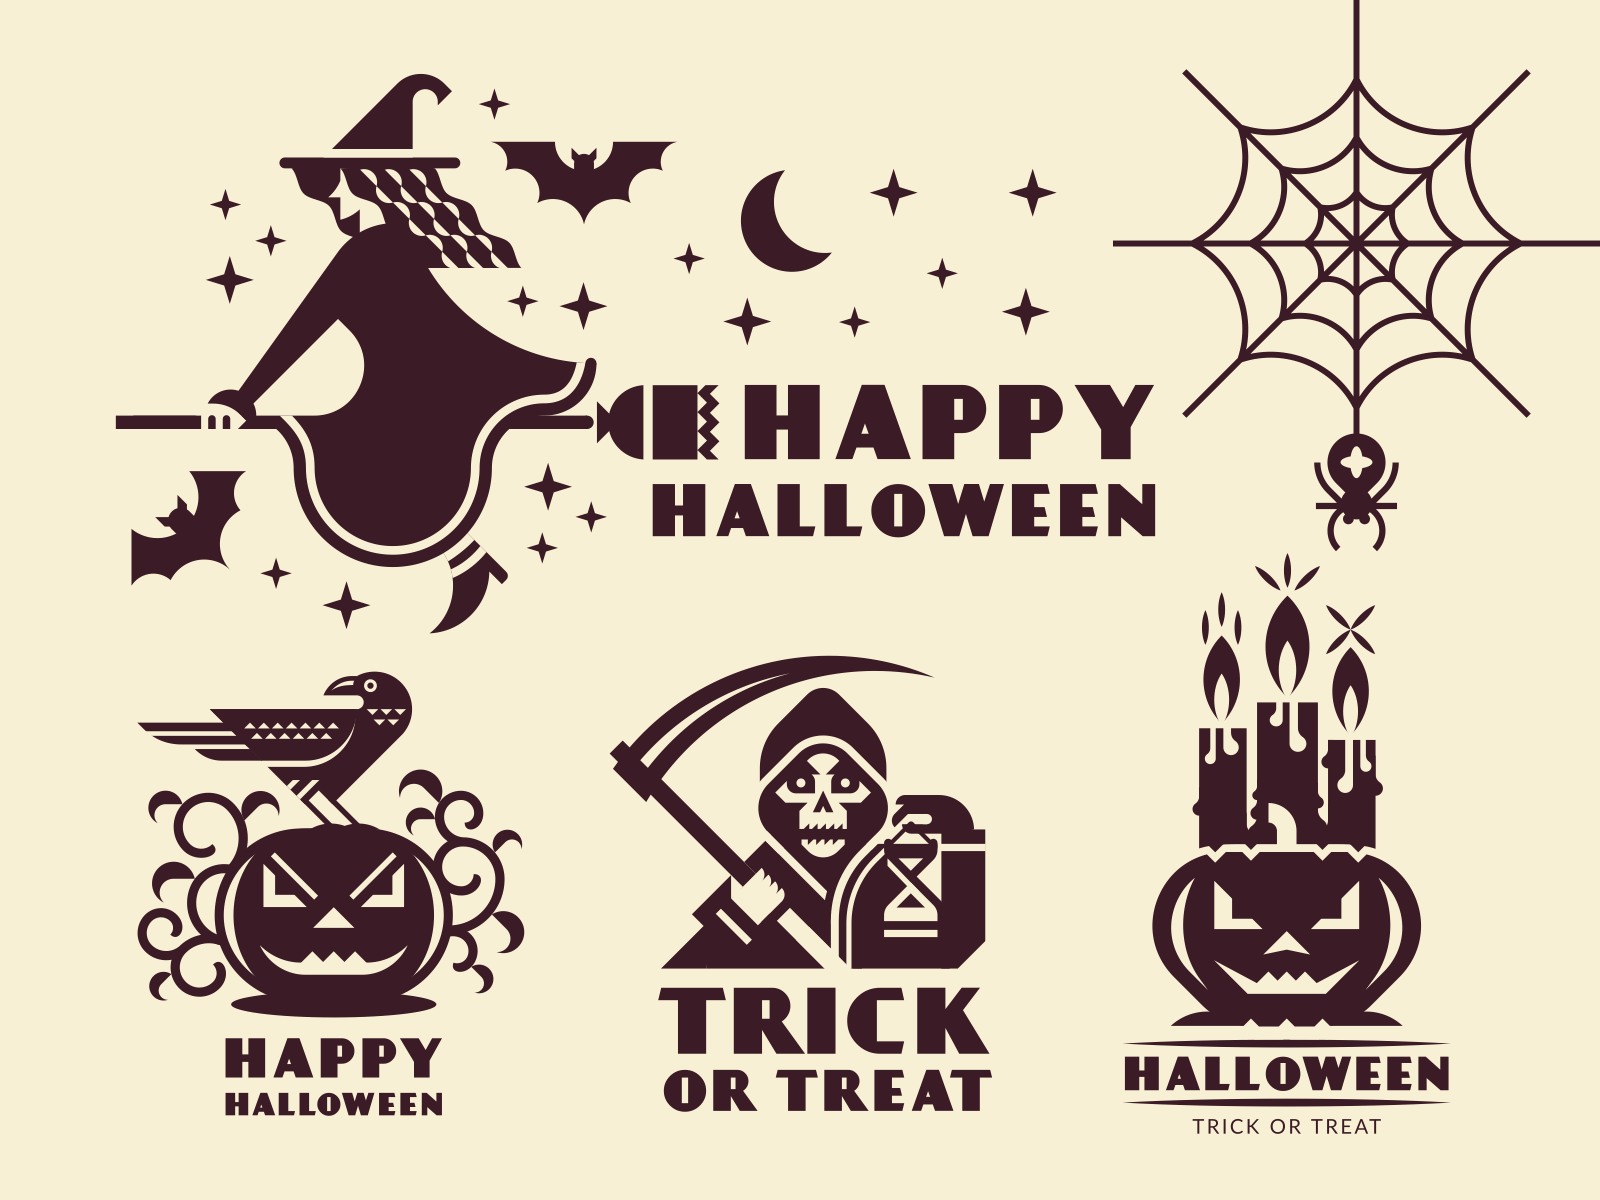 Halloween logo by Alexey Boychenko on Dribbble